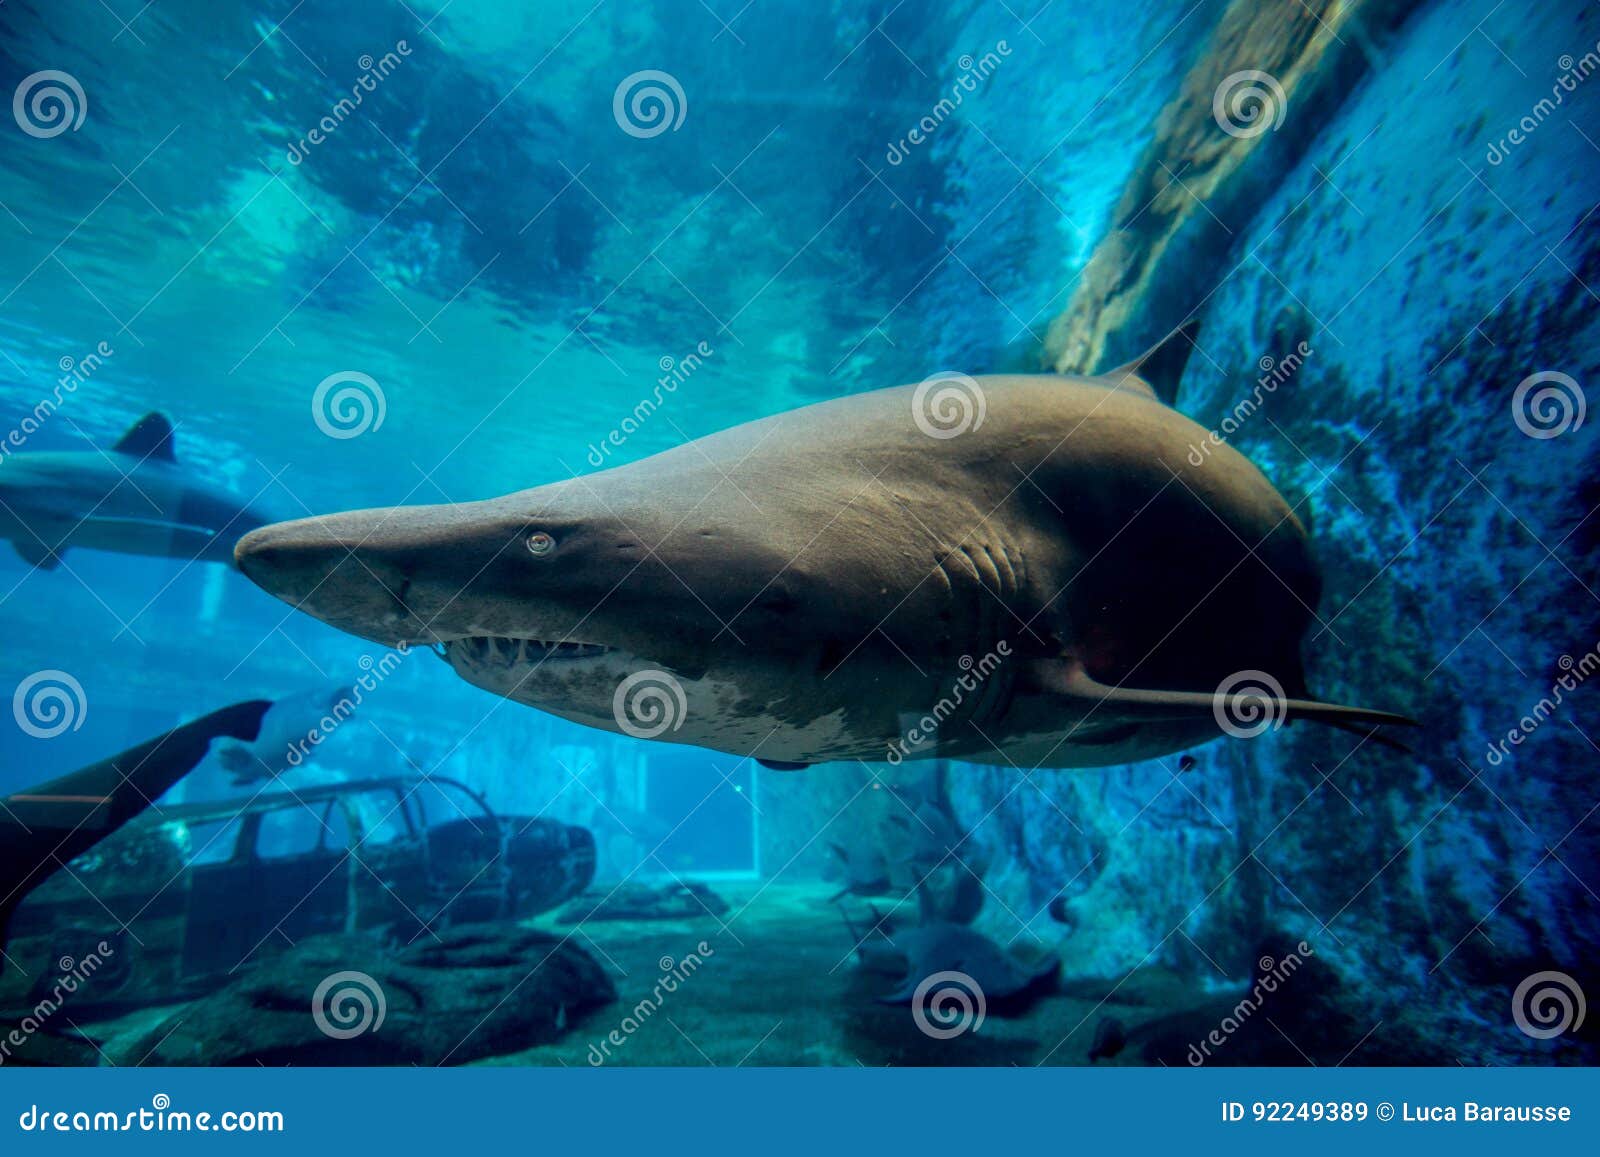 ragged tooth shark in aquarium